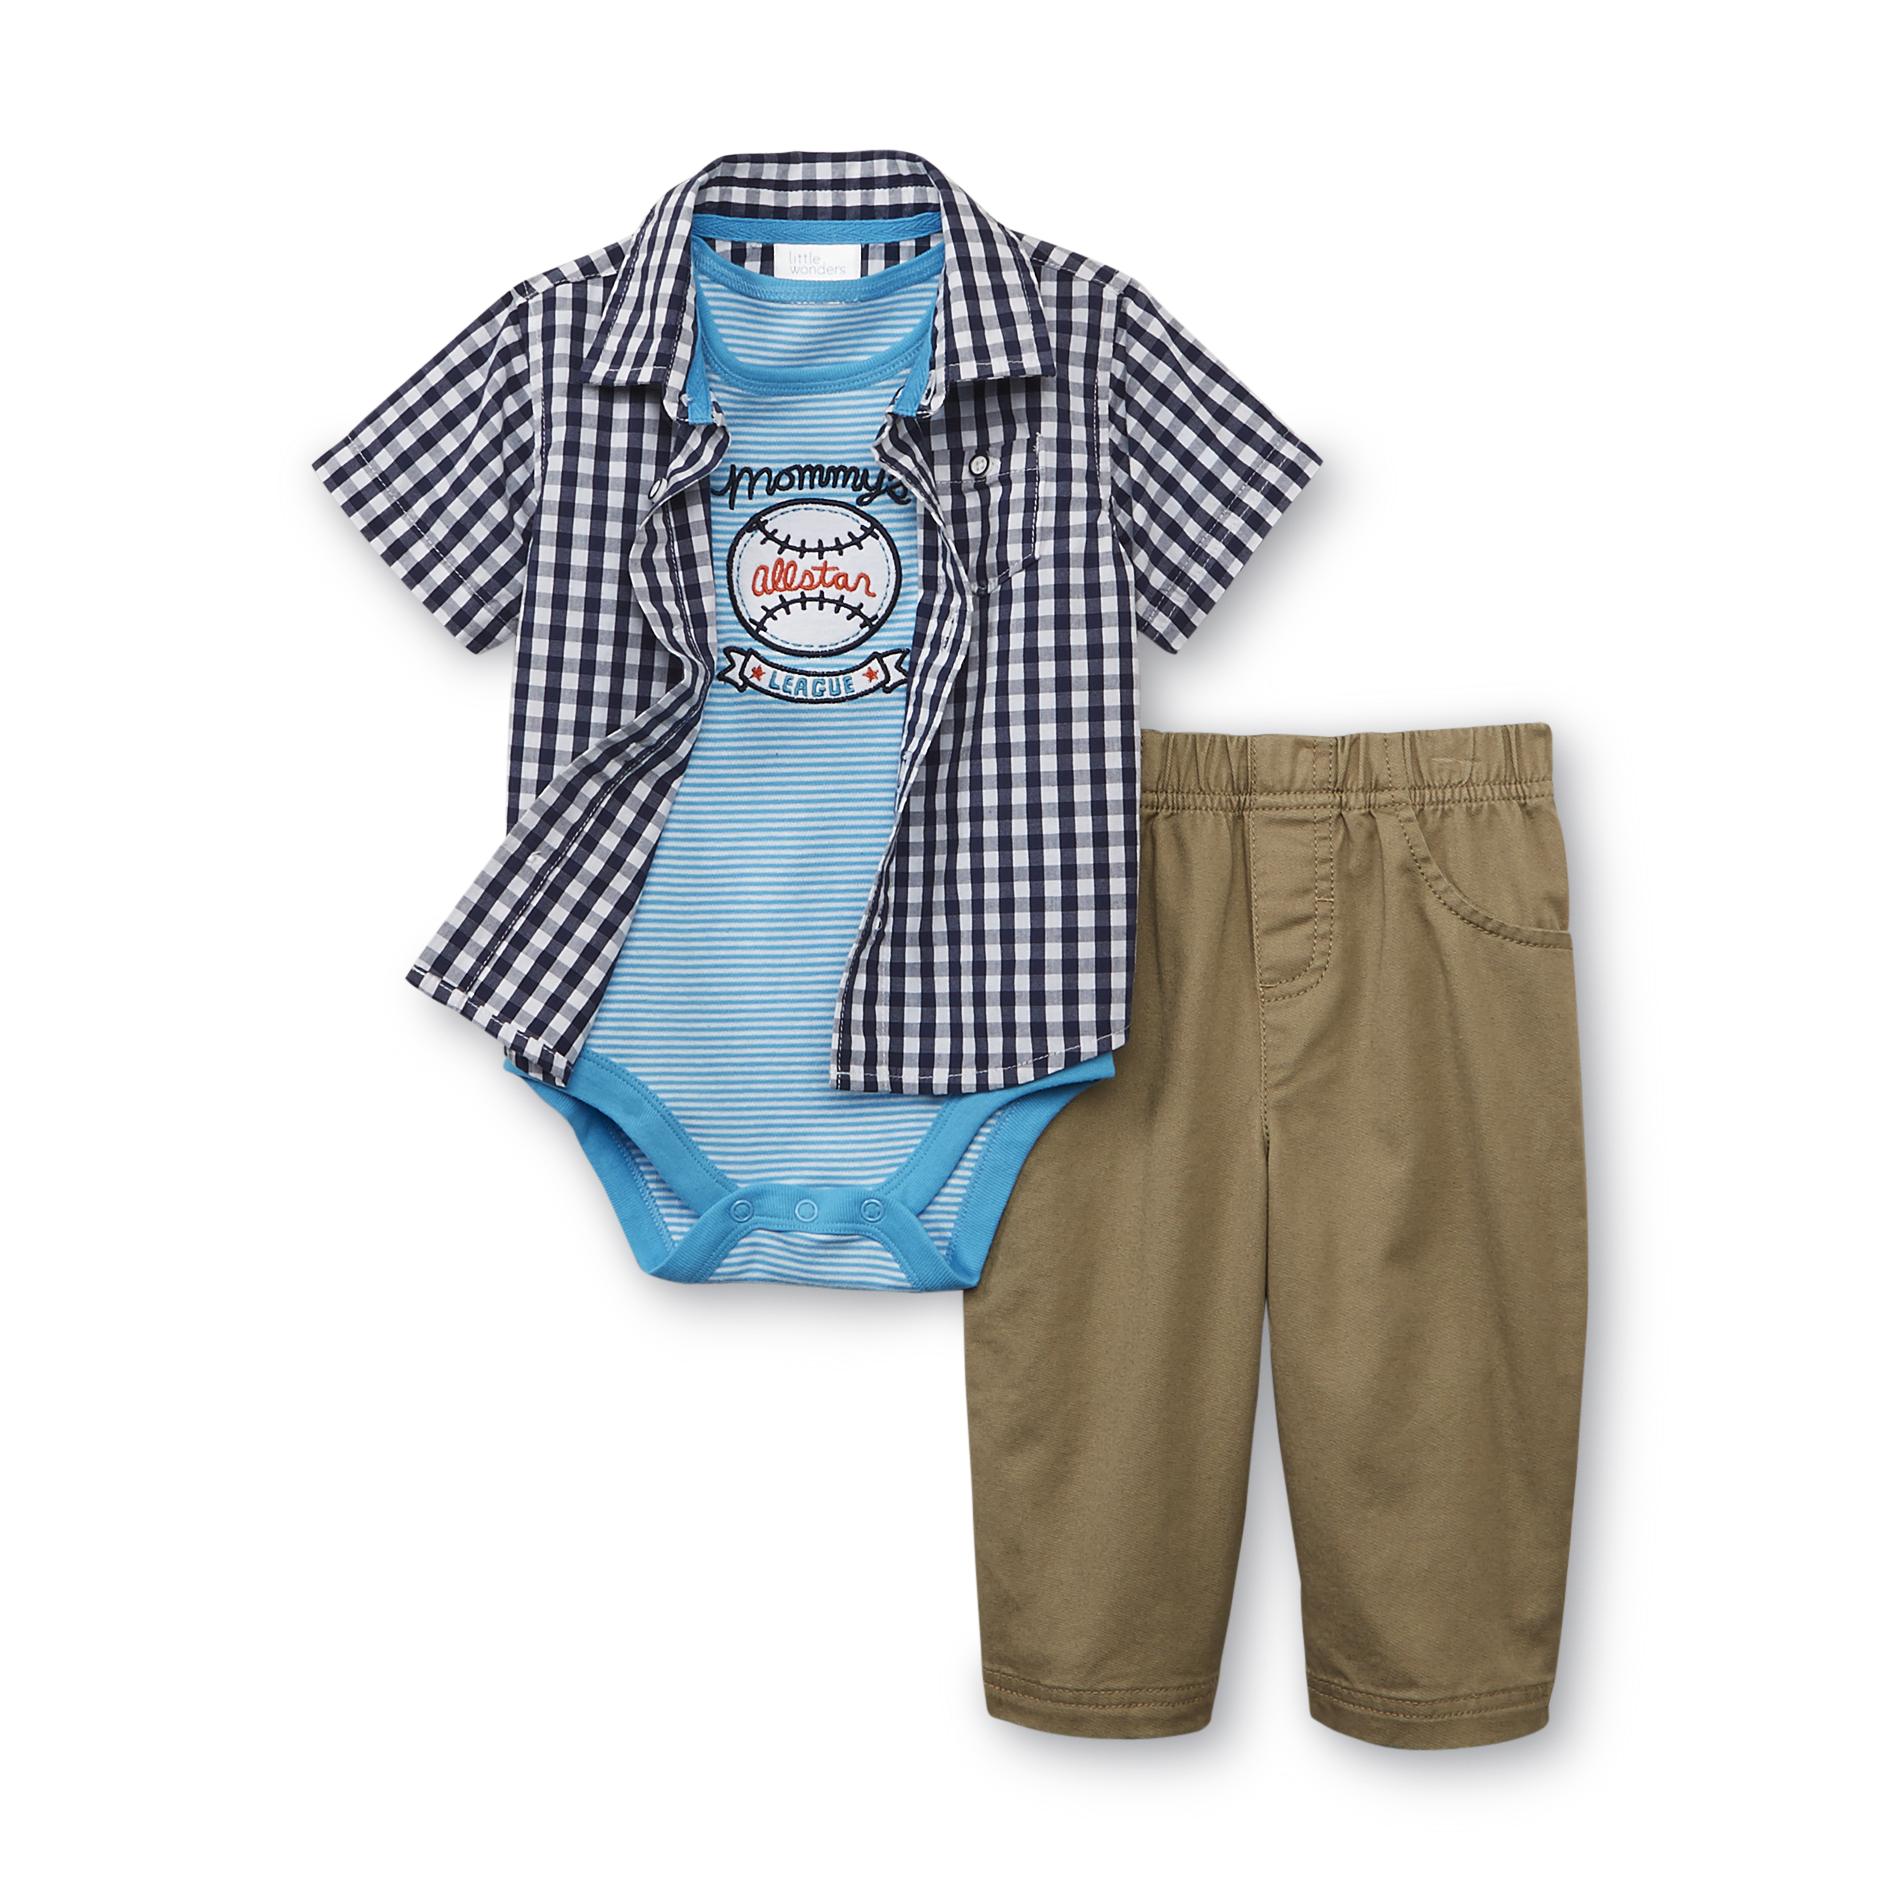 Little Wonders Newborn & Infant Boy's Bodysuit  Shirt & Pants - Gingham Check